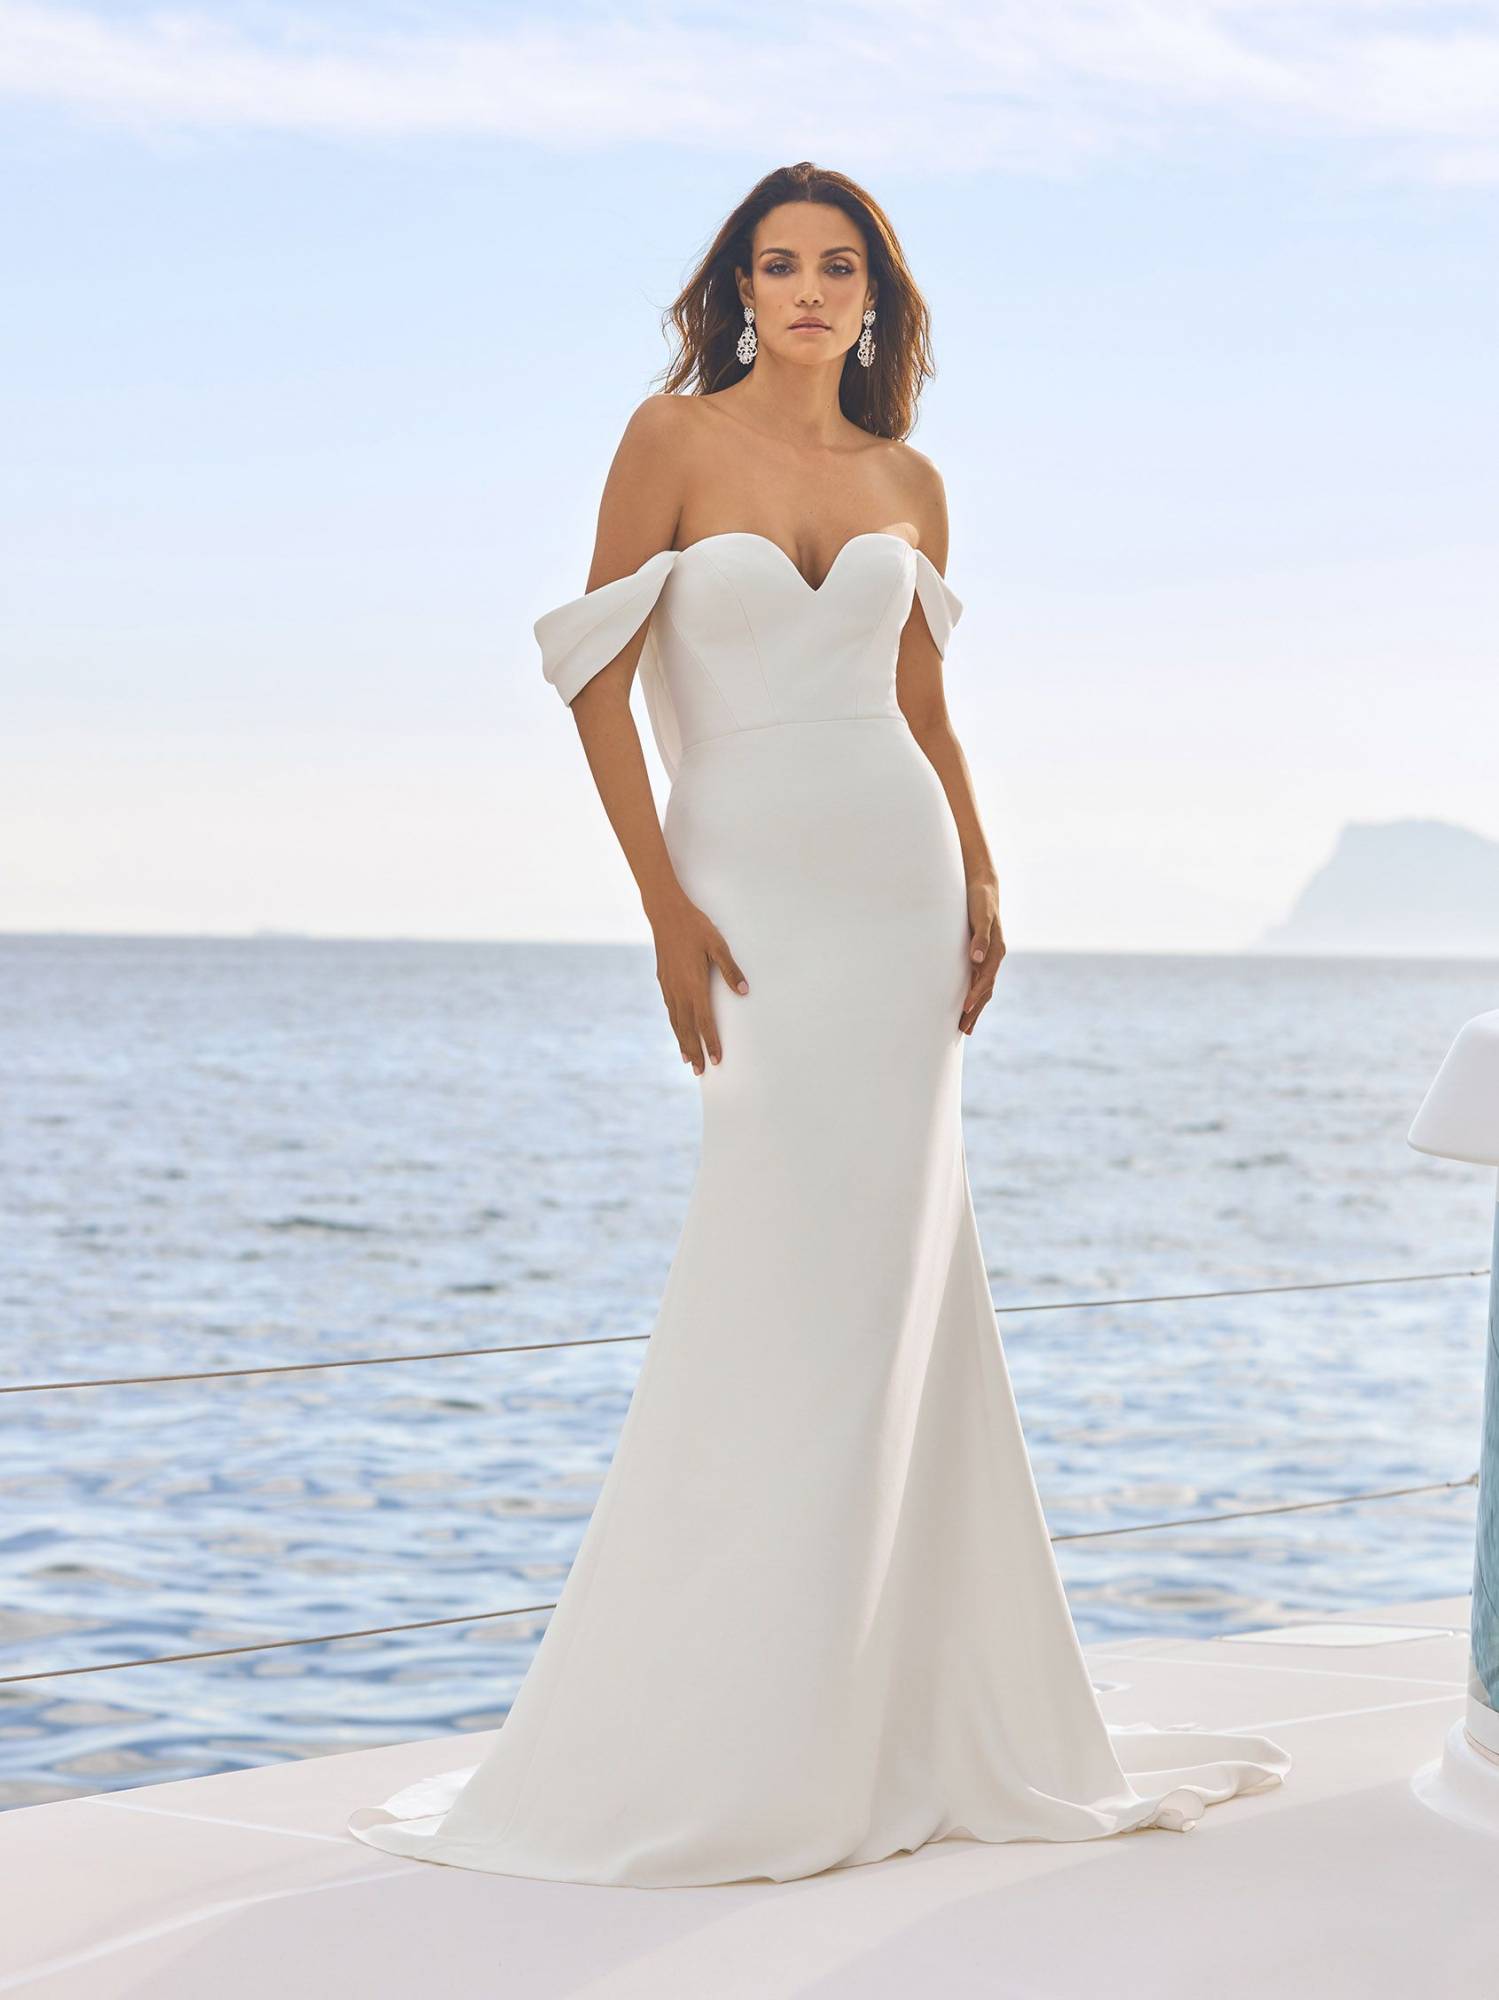 robe de mariée sirène glamour chic,AUBREY STYLISTE  PRONOVIAS SUR MARSEILLE PACA